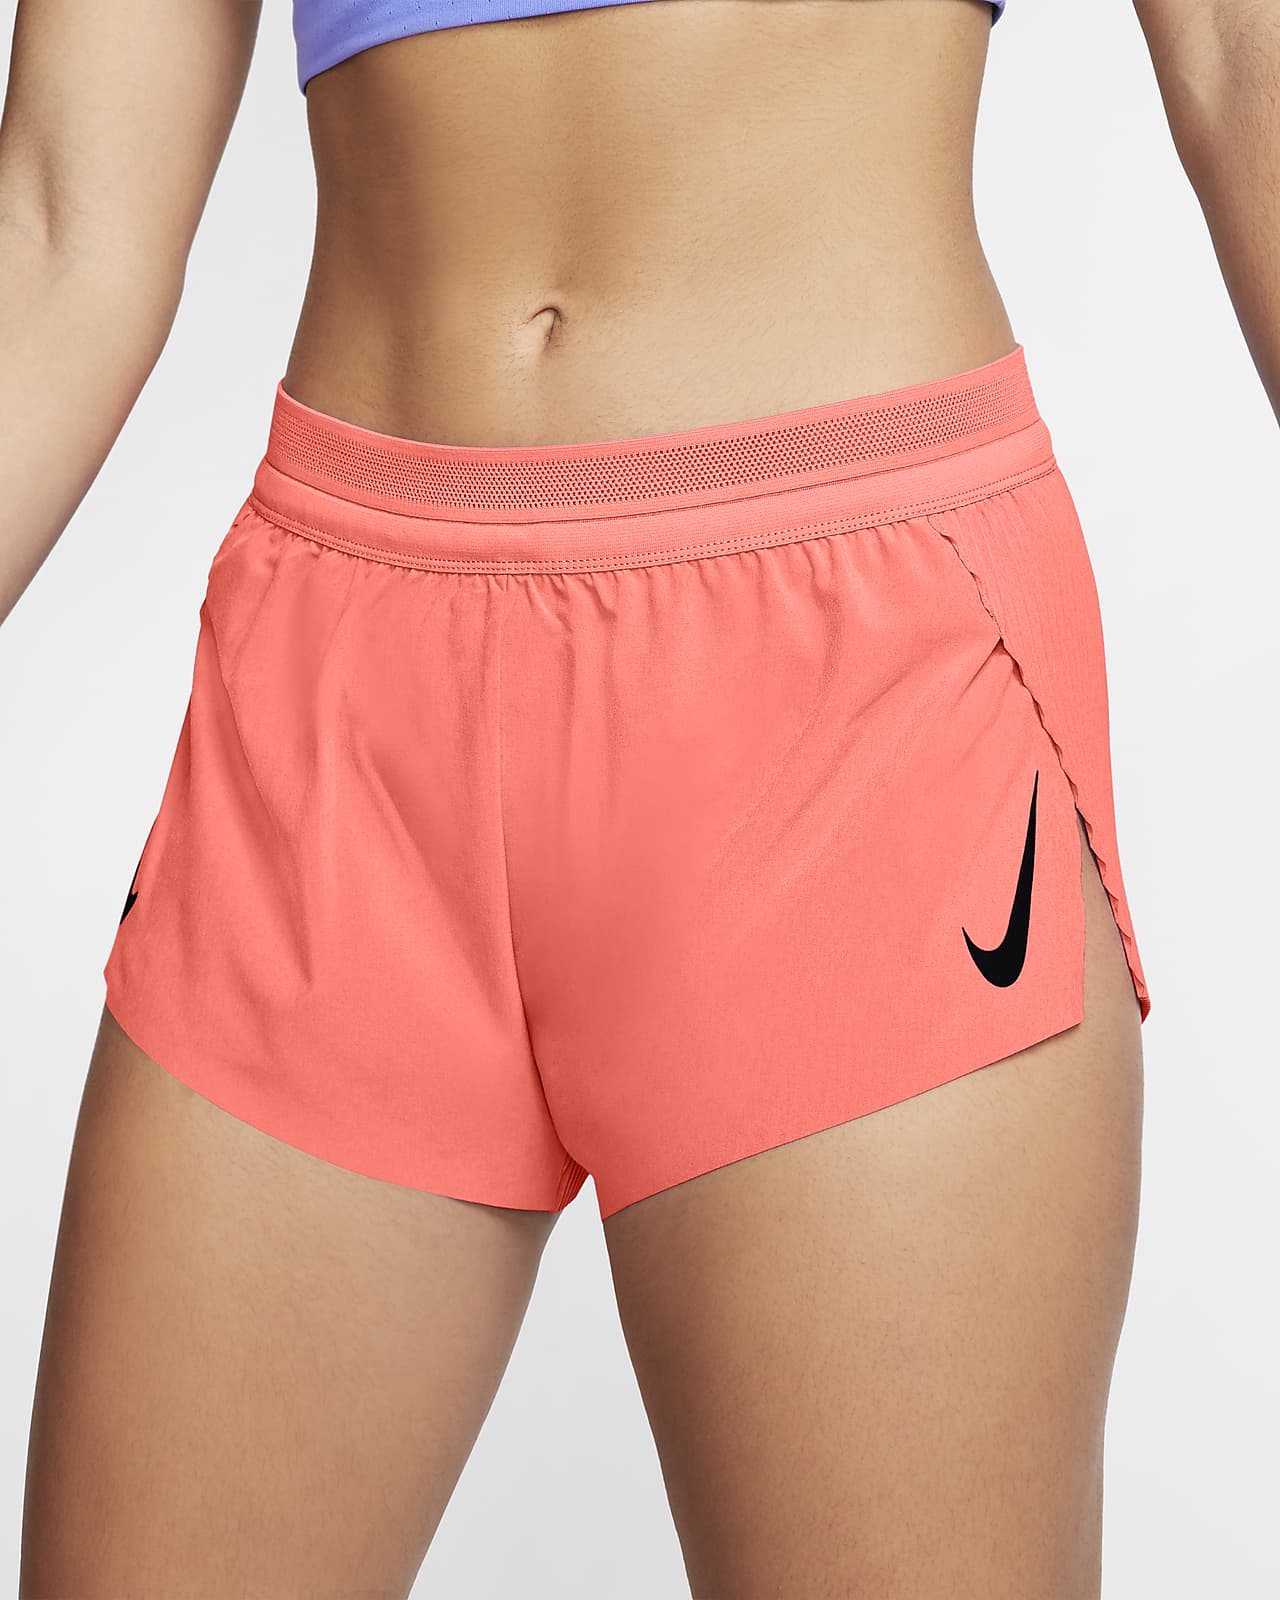 nike running shorts for women on sale